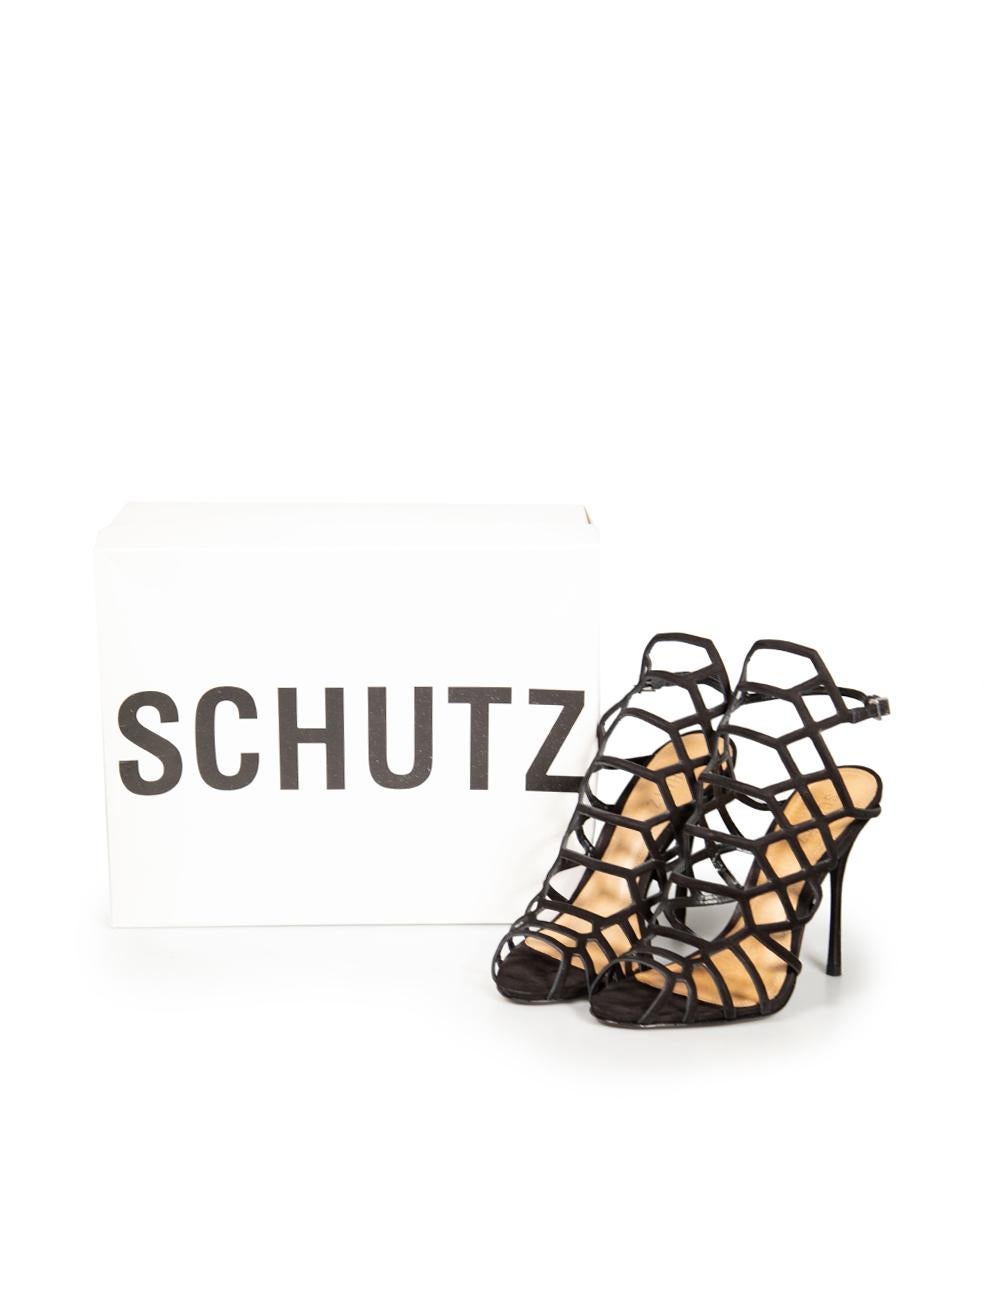 Schutz Black Suede Cut Out Caged Heels Size EU 39 For Sale 4